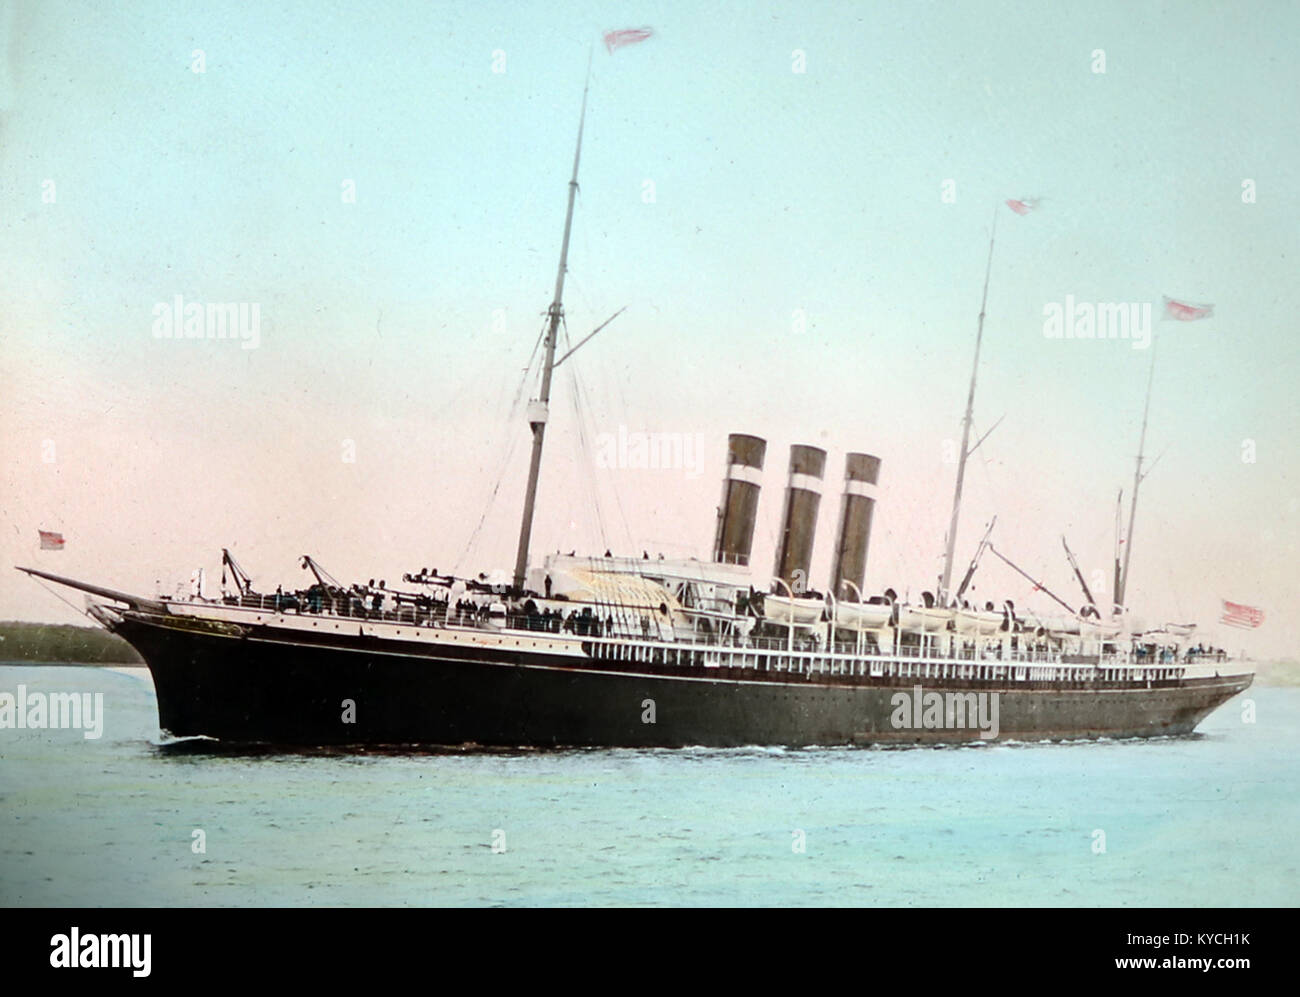 Dampfschiff Paris, französische Ocean Liner, Anfang 1900, handkoloriert Foto Stockfoto